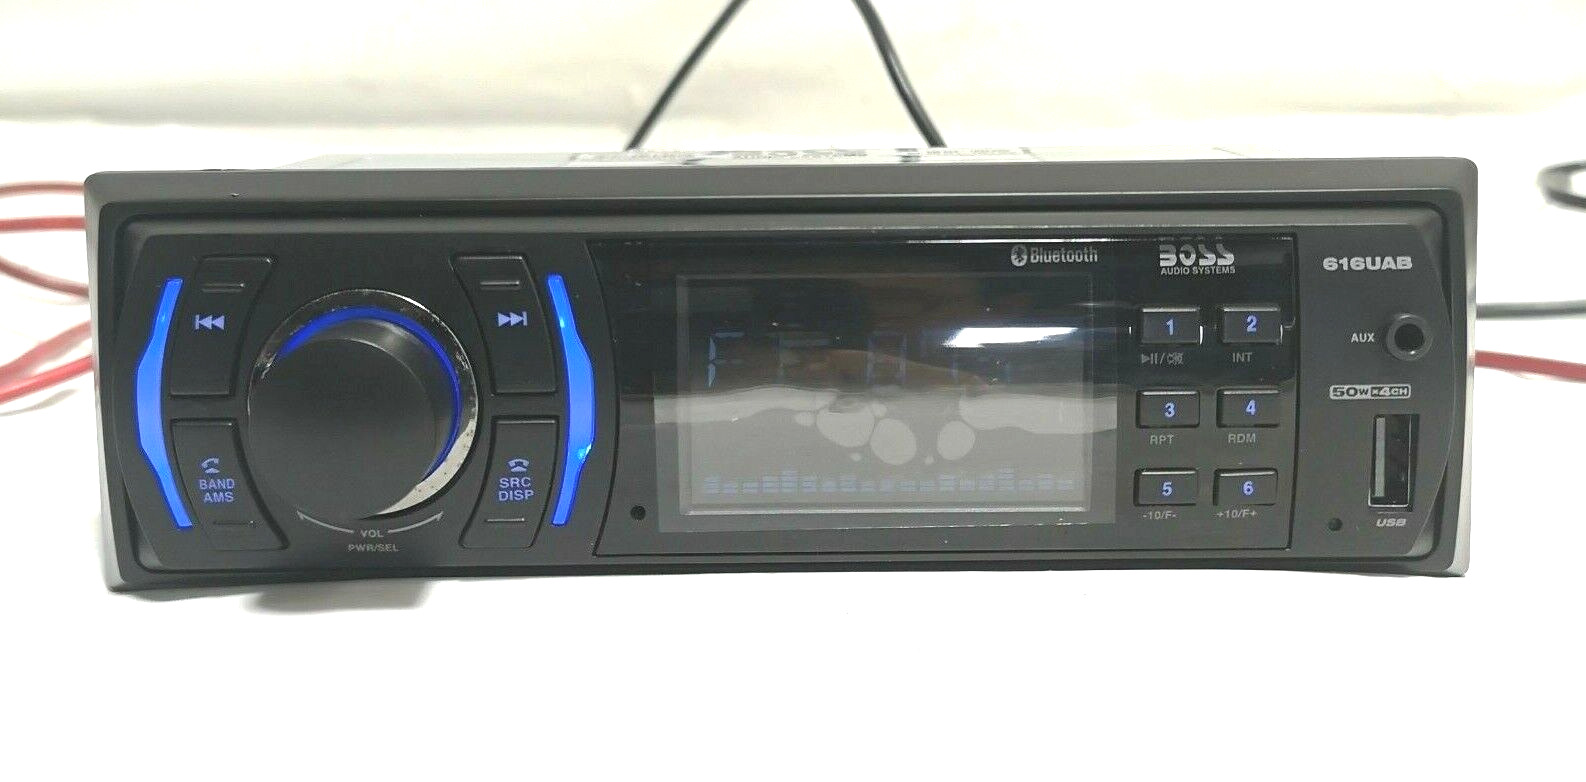 BOSS Audio Car Mp3 Player- 616UAB- 200 watts- 4 channel MP3 RADIO NEW NO BOX